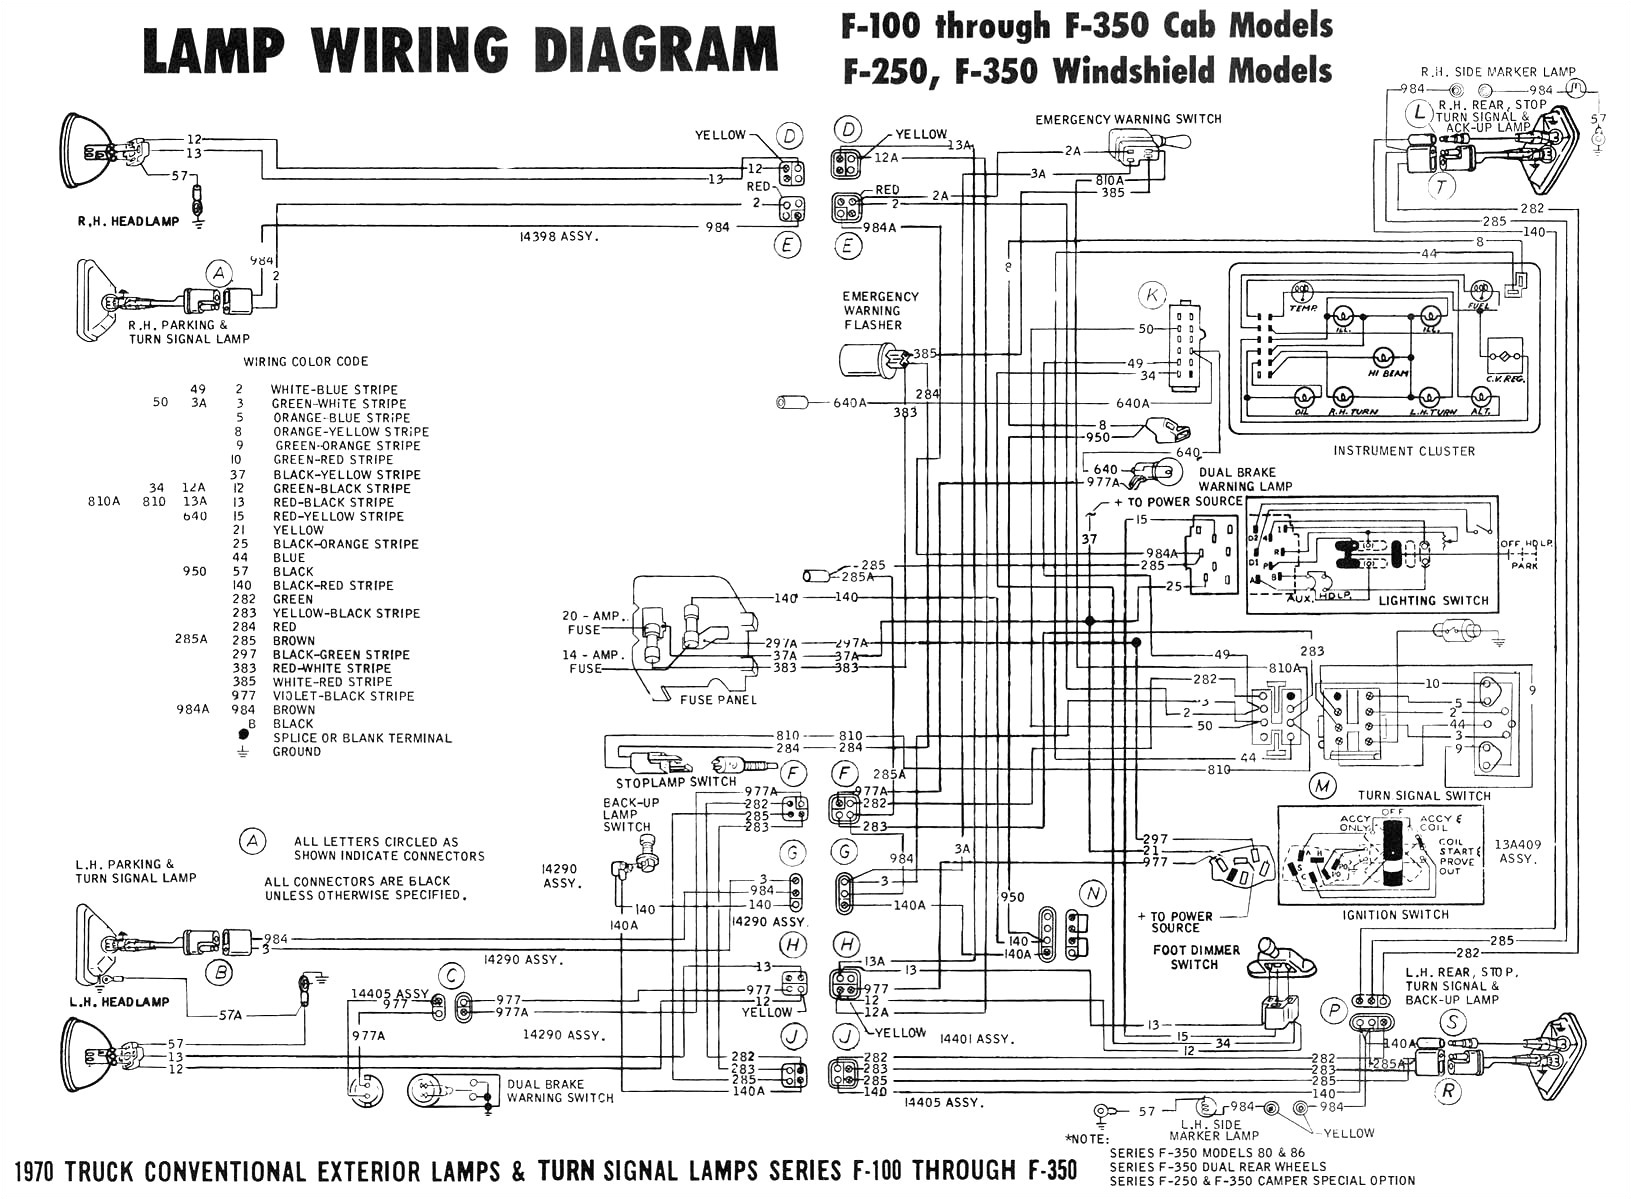 2004 chrysler sebring fuse diagram lzk gallery extended wiring diagram 2004 chrysler pacifica 3 5 engine diagram lzk gallery